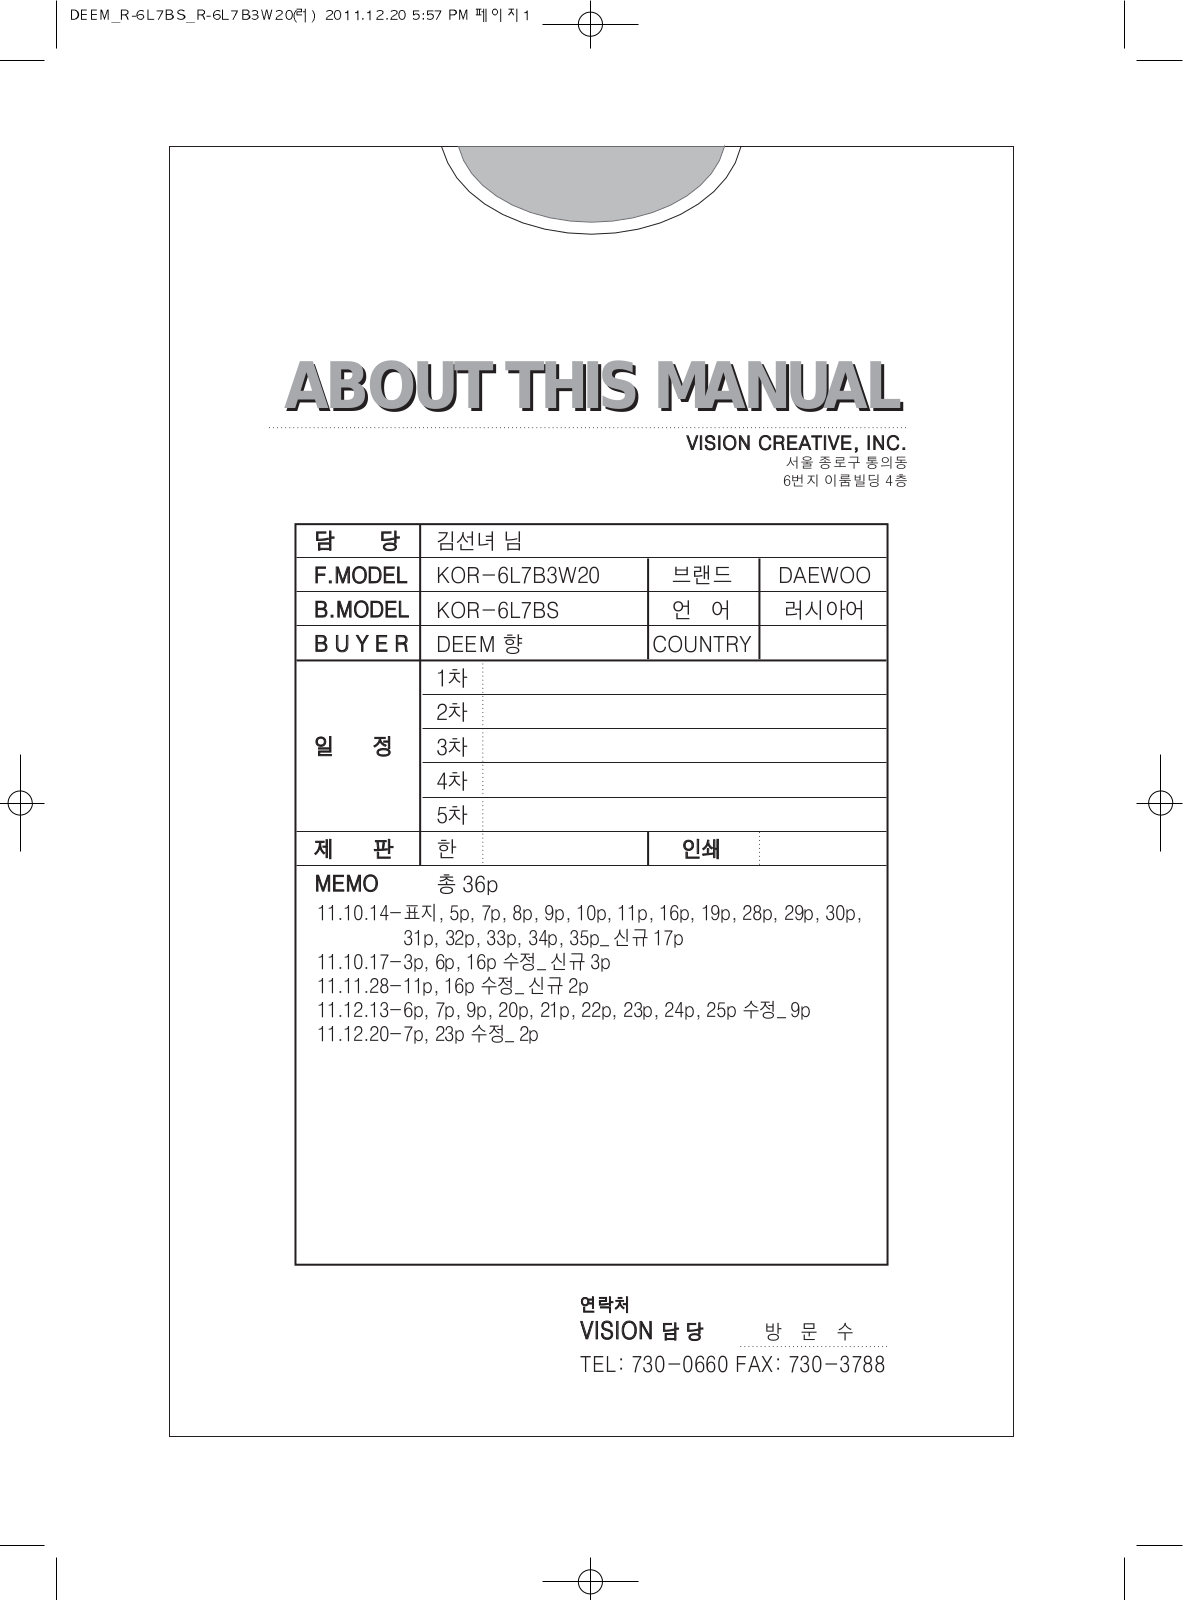 Daewoo KOR-6L7BS User Manual